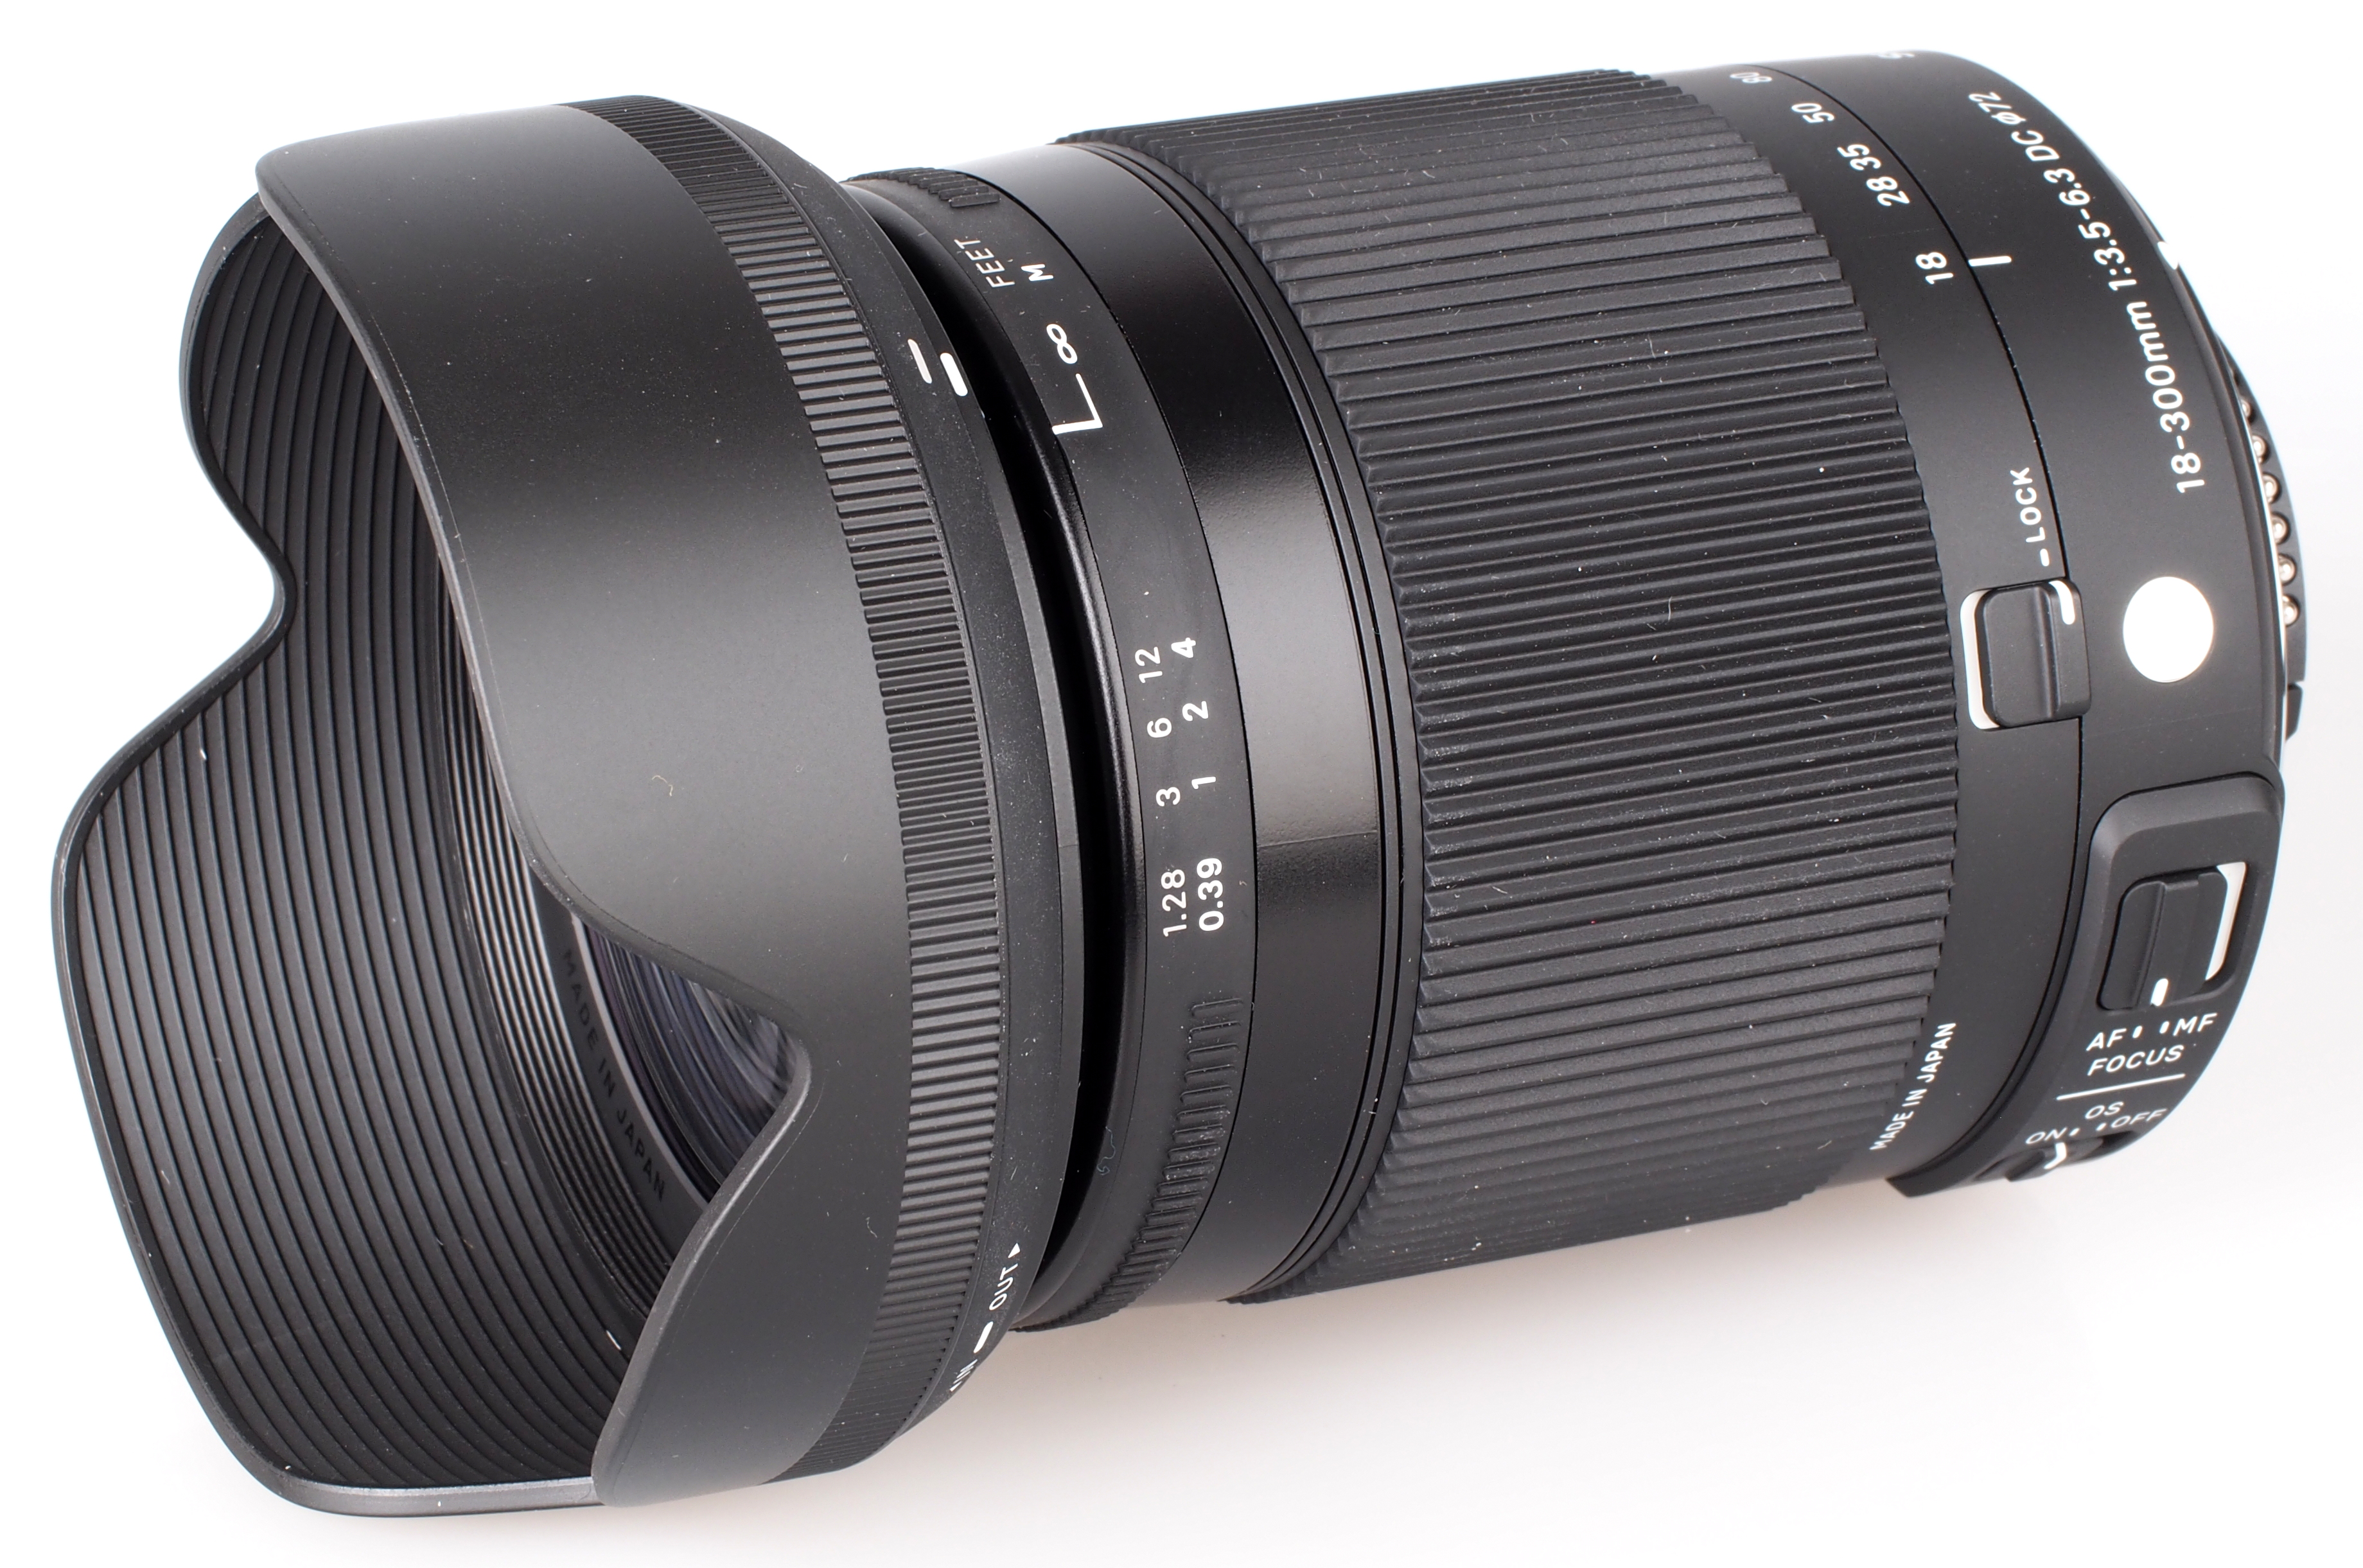 Sigma 18-300mm f/3.5-6.3 Macro OS HSM C Lens Review